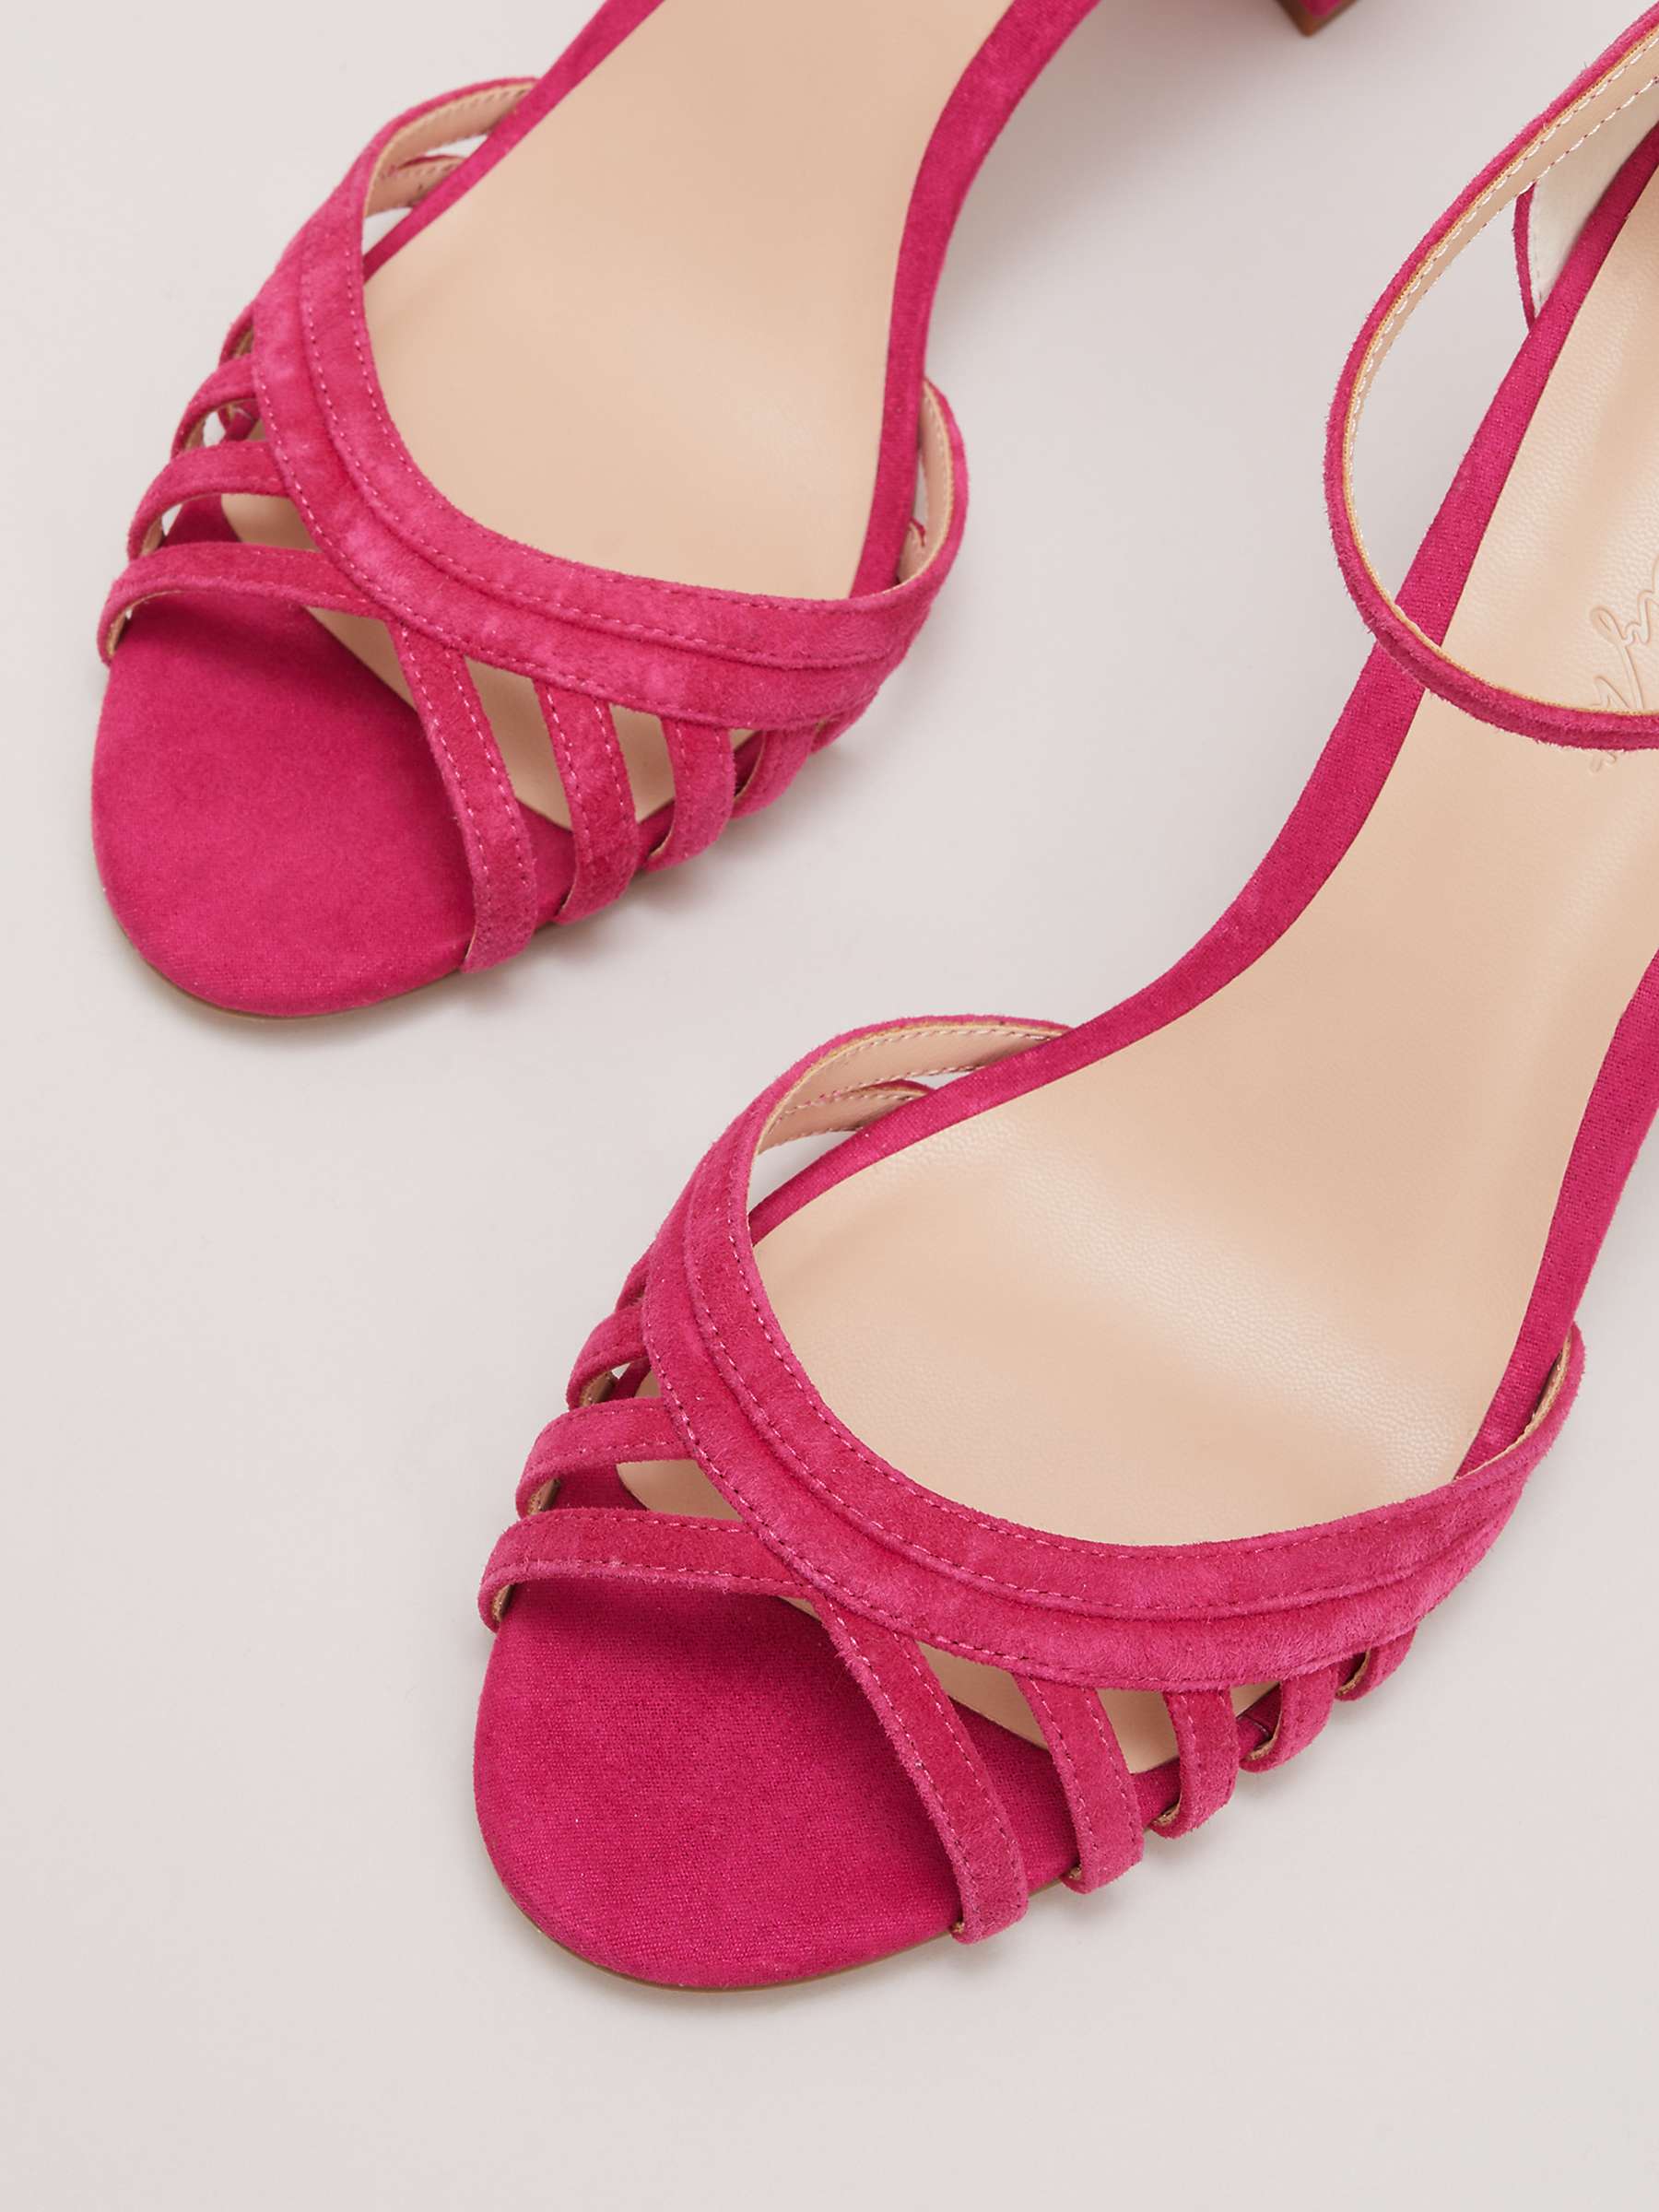 Buy Phase Eight Suede Lattice Block Heel Sandals, Pink Online at johnlewis.com